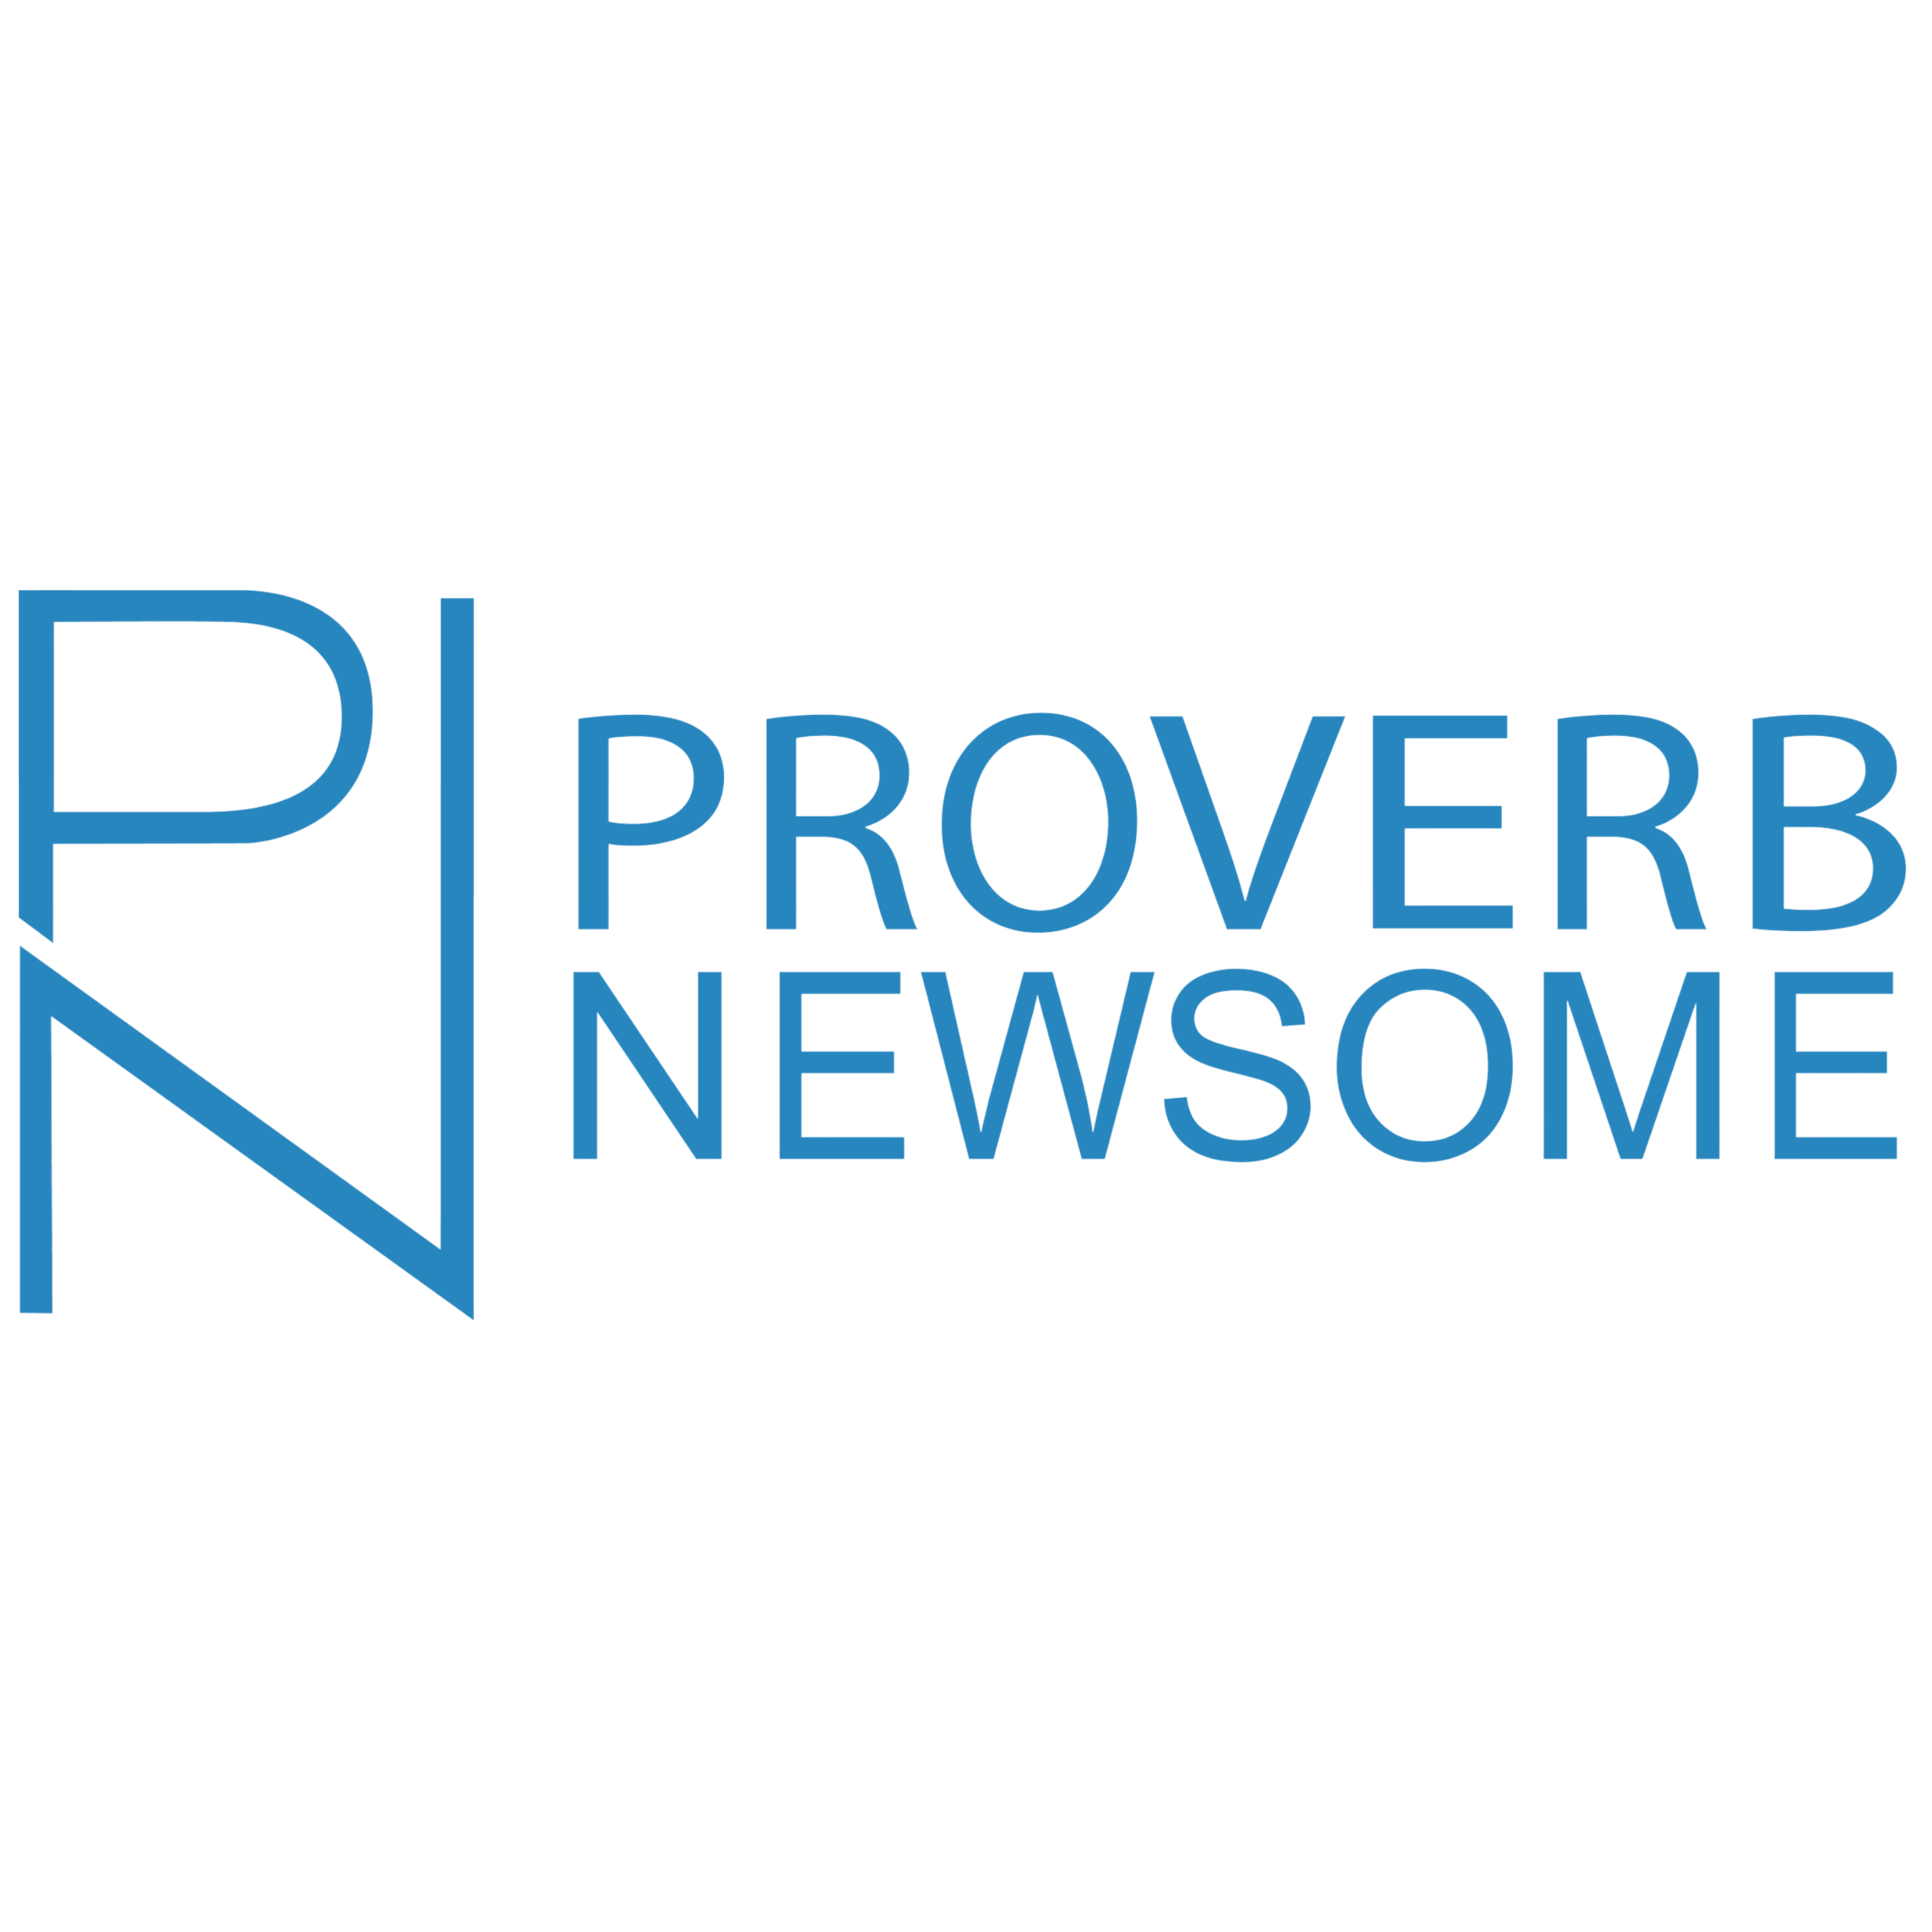 Proverb Newsome